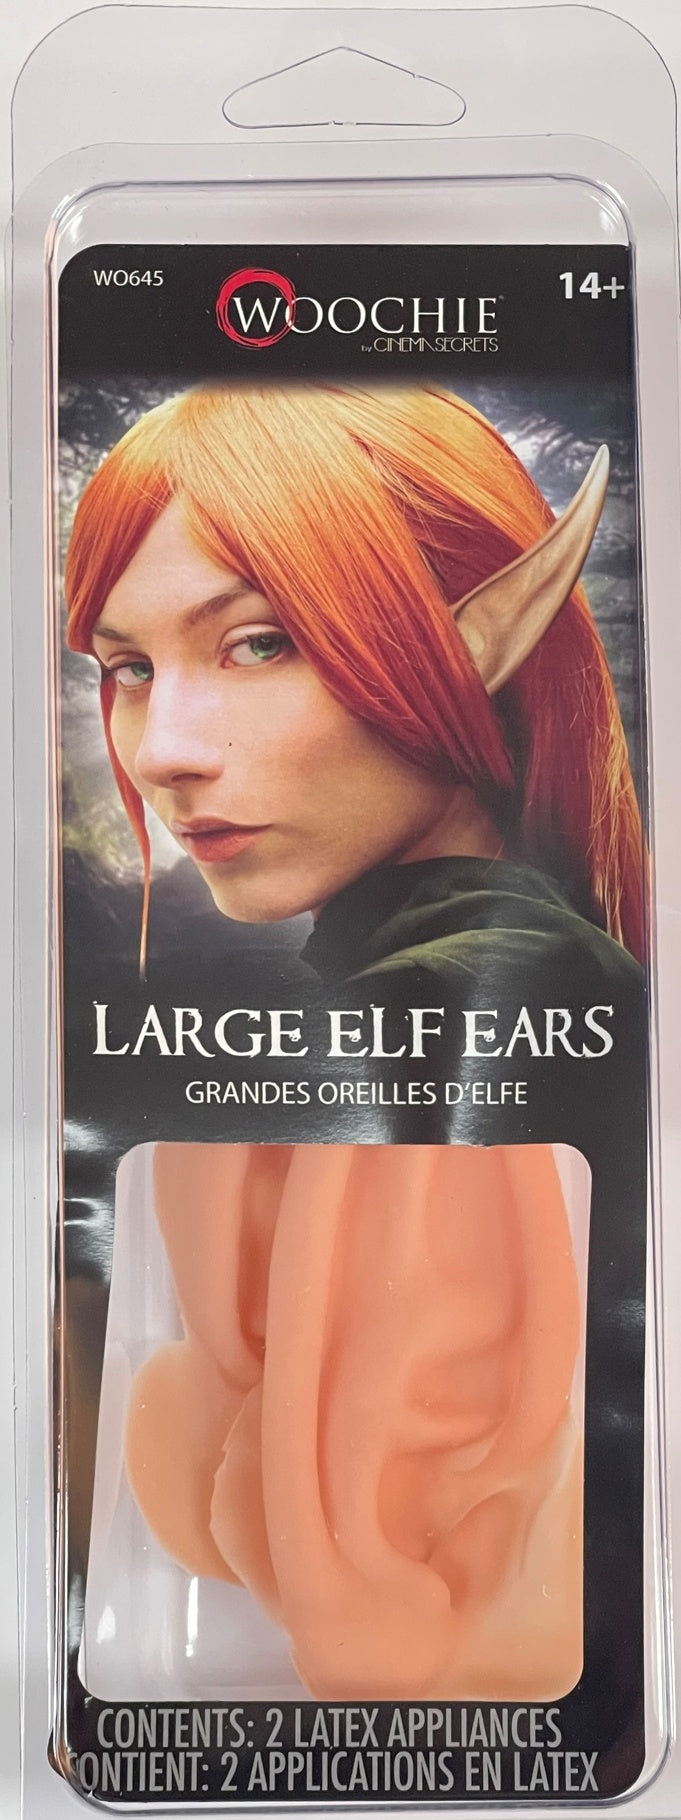 Large Elf Ears Professional Quality Halloween Costume Makeup - Large Elf